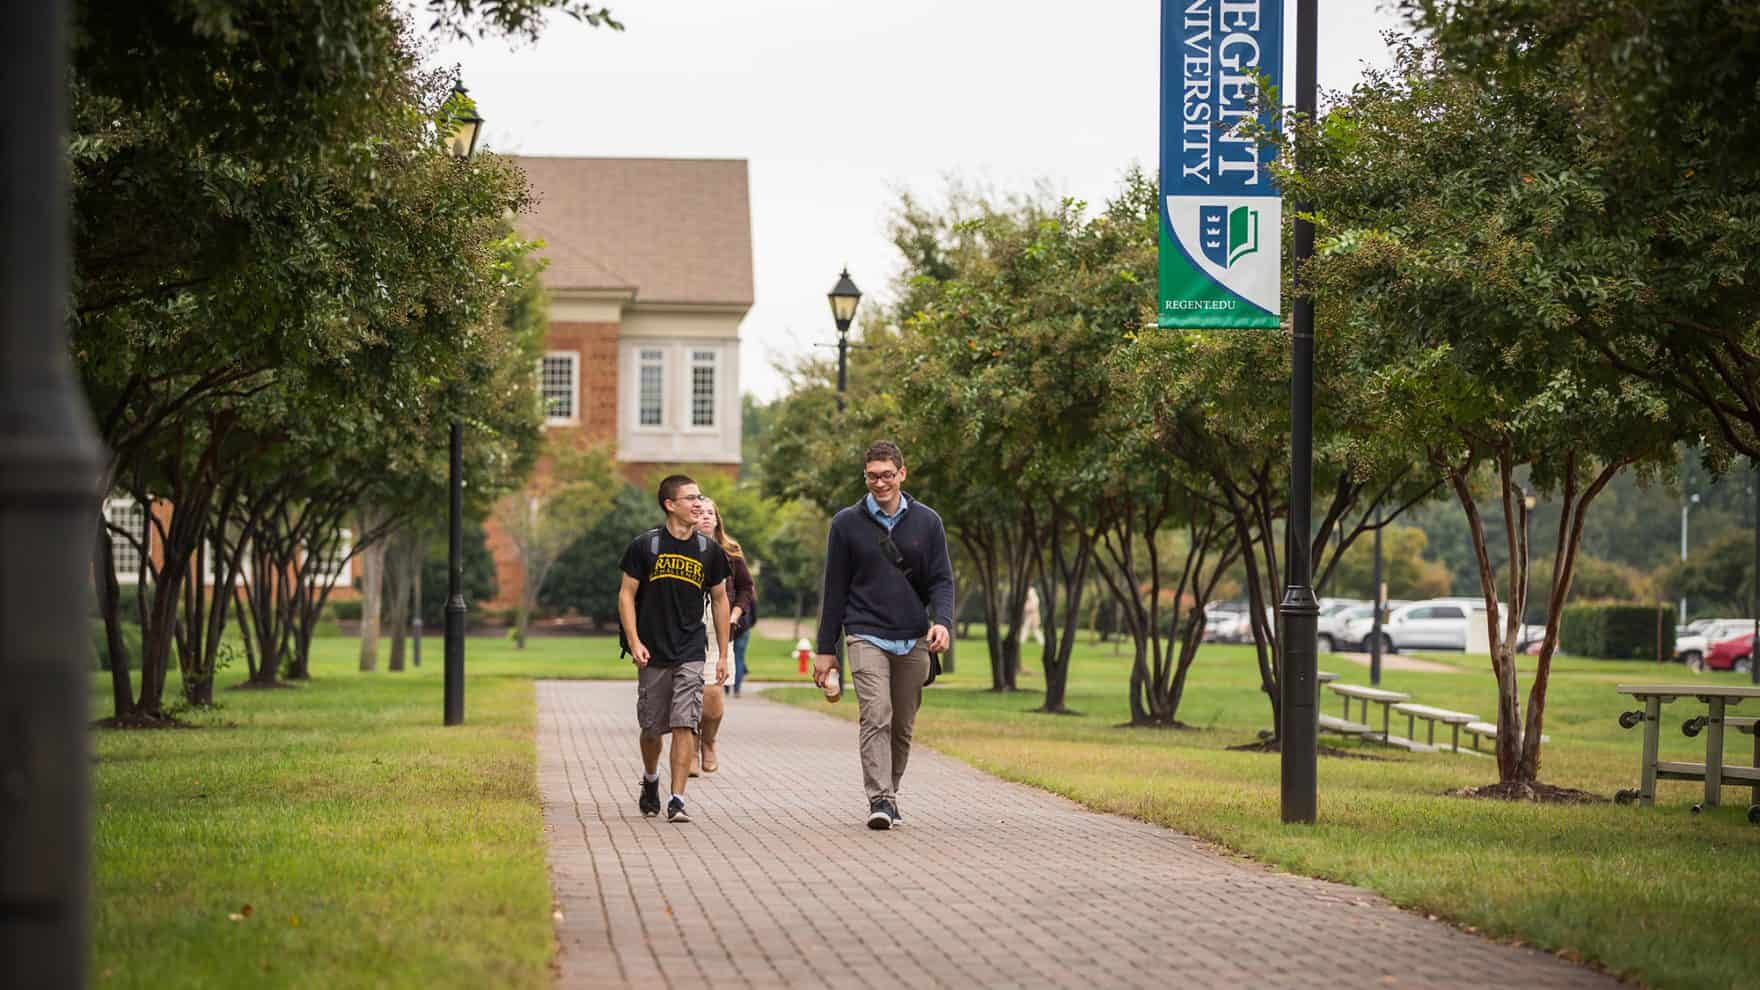 Students walk through Regent University, a Christian college in Virginia Beach.